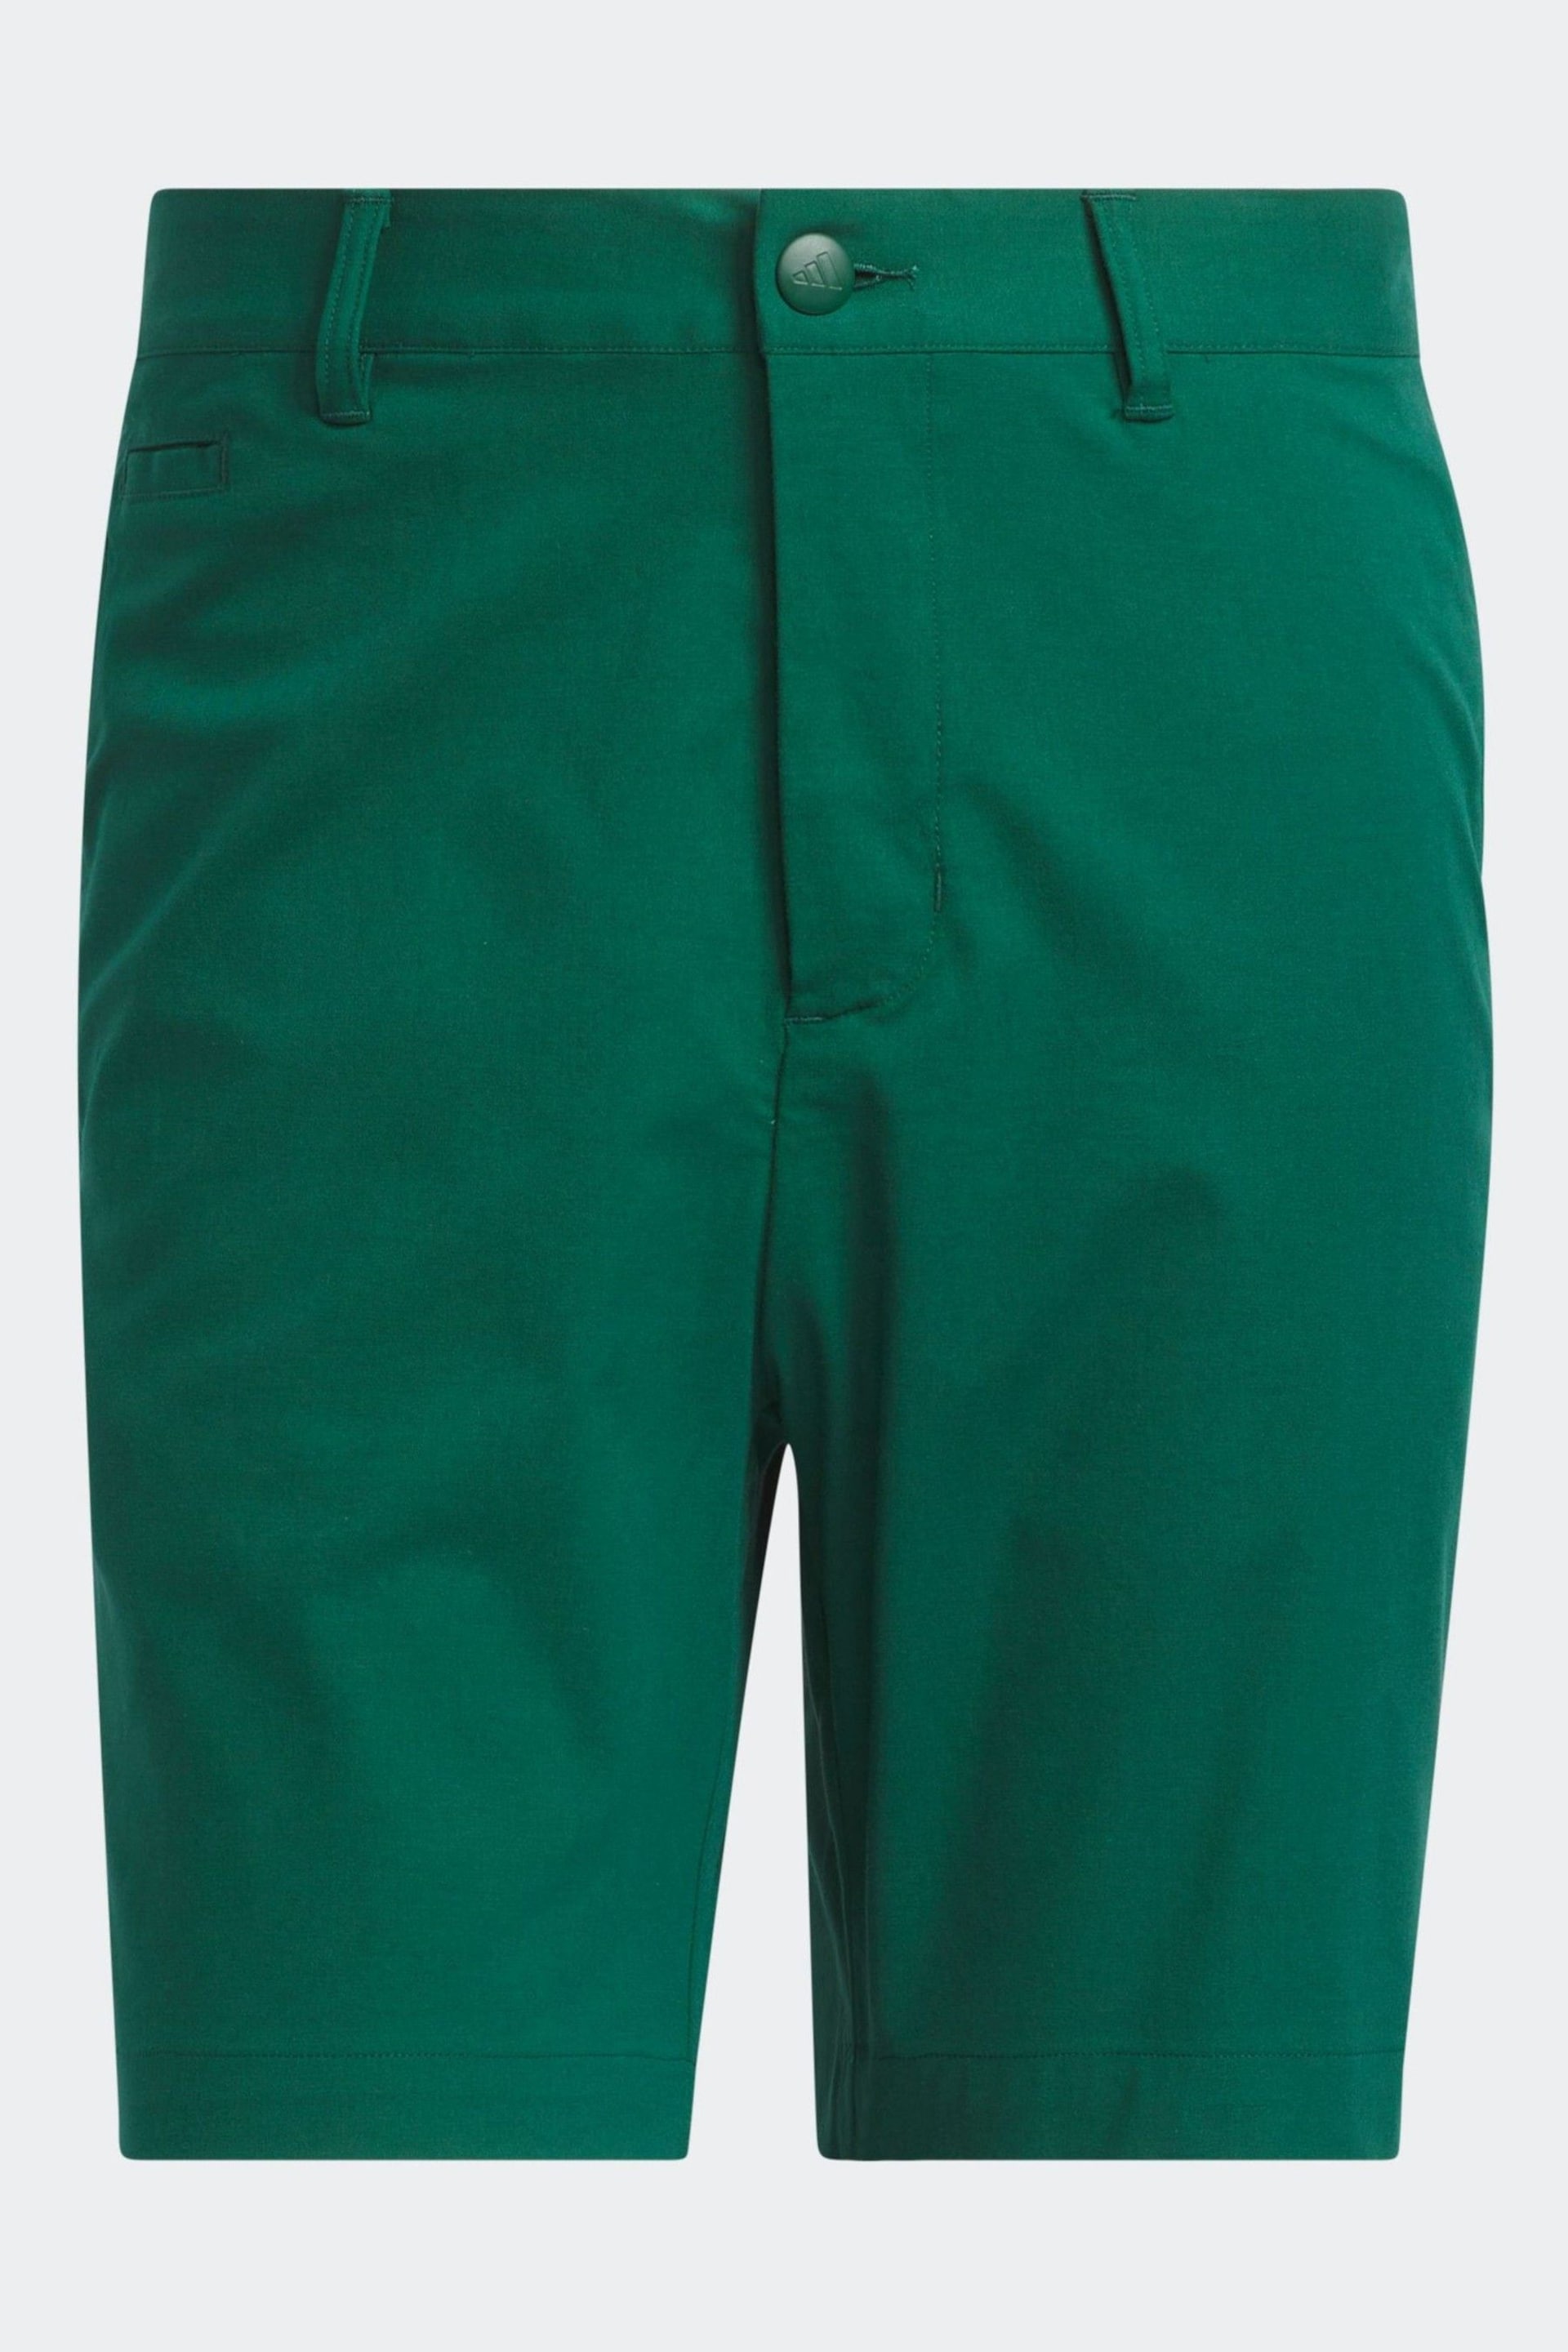 adidas Golf Go To Five Pocket Shorts - Image 6 of 6